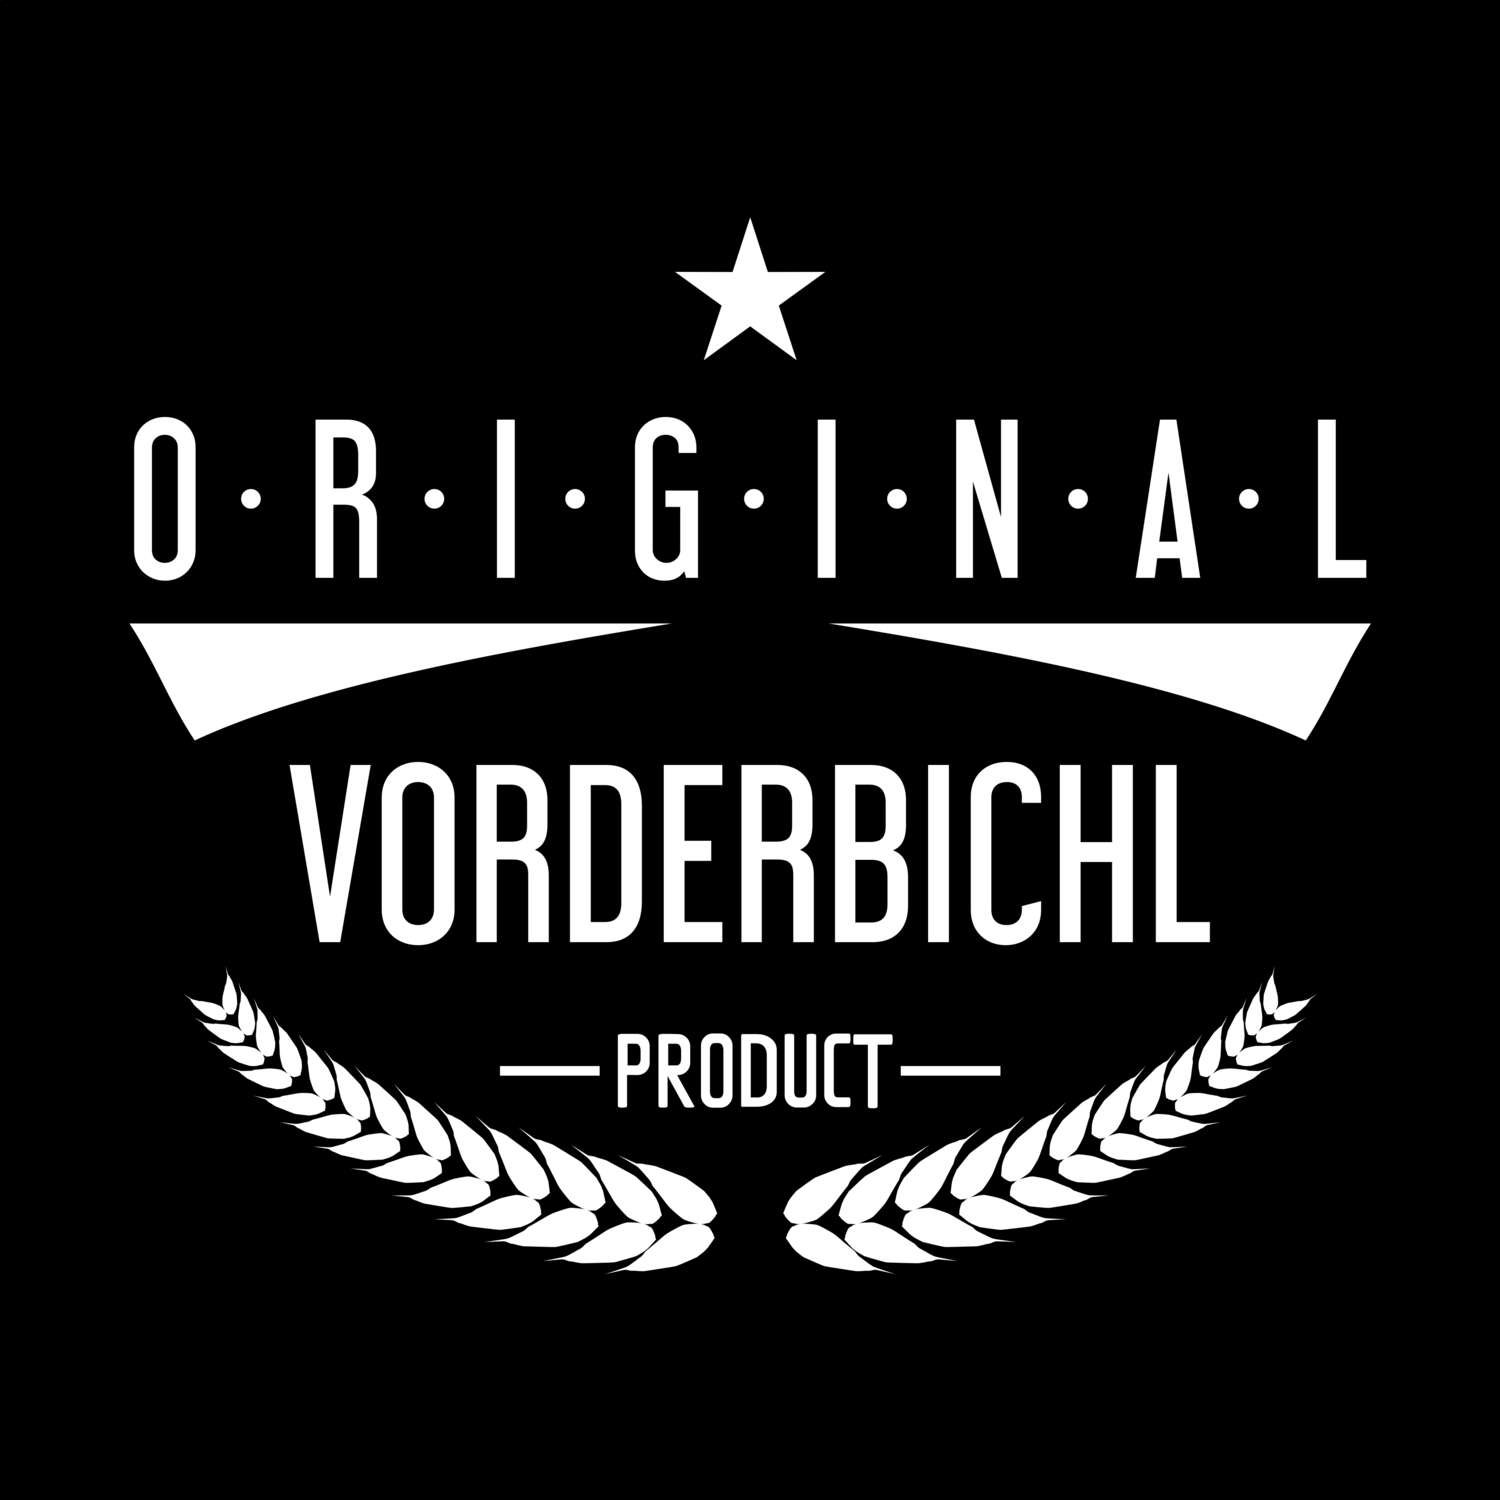 Vorderbichl T-Shirt »Original Product«